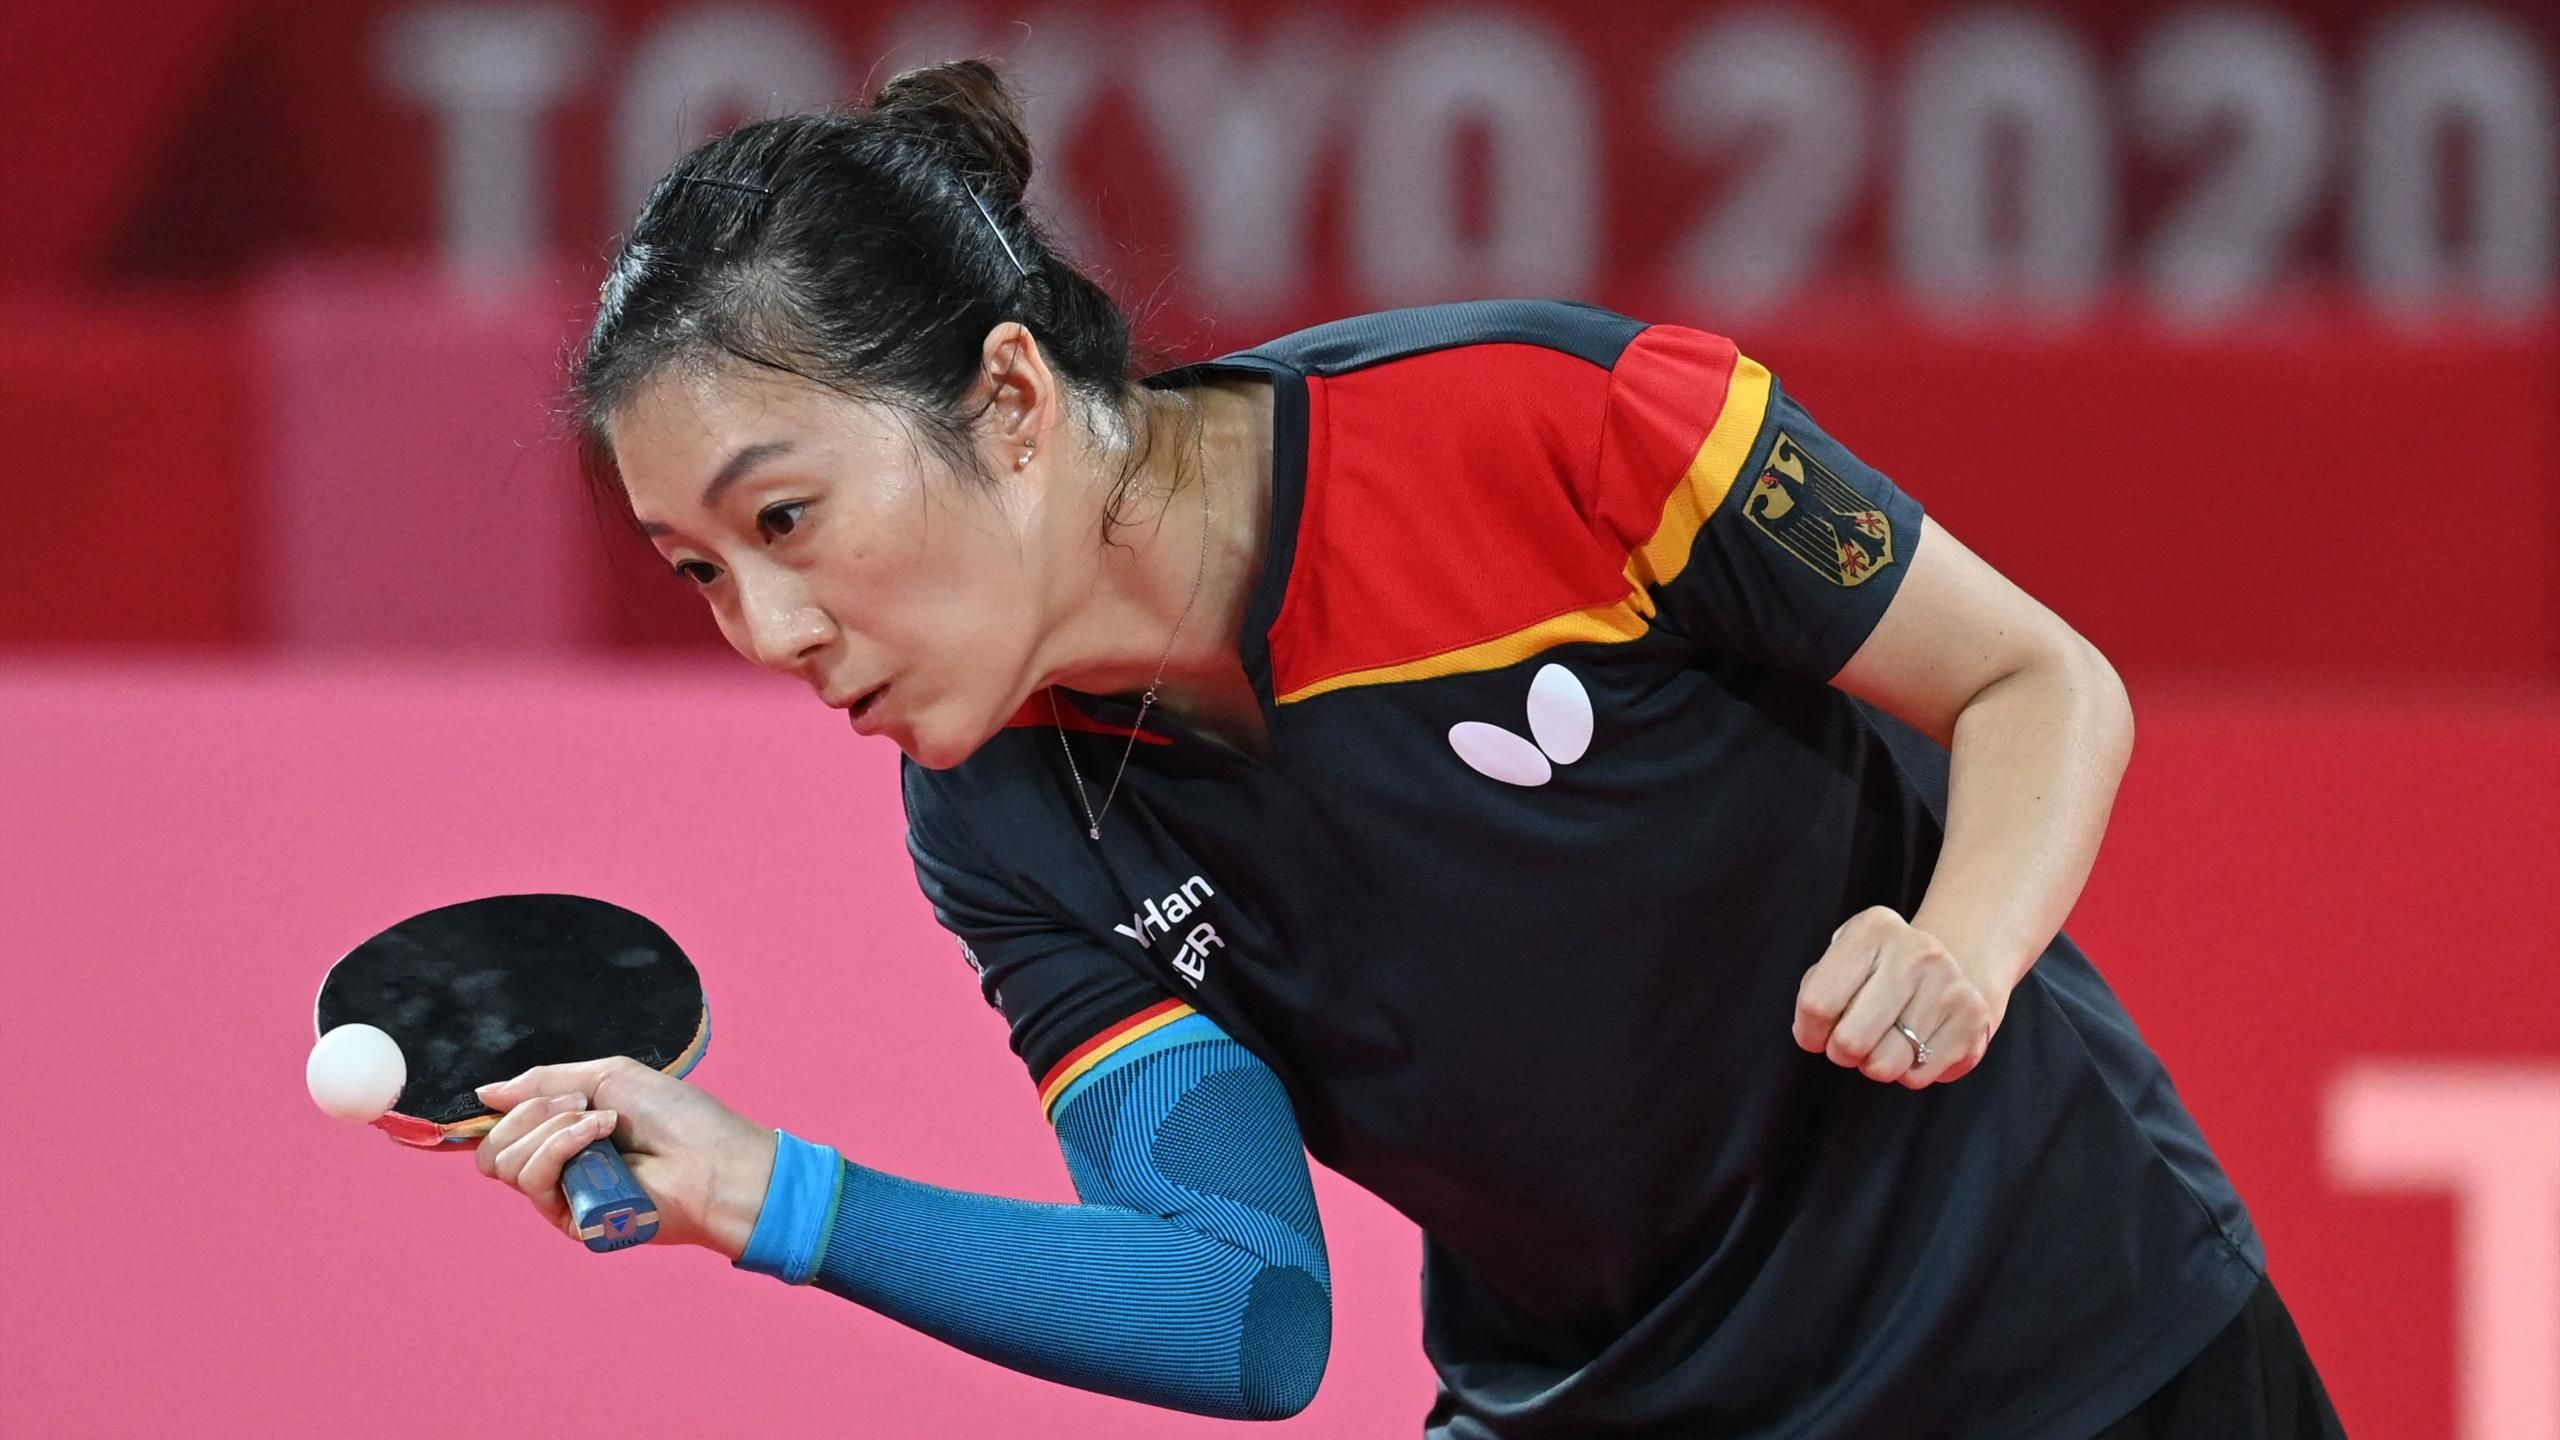 Olympia 2021, Tischtennis-Highlights Deutschland scheitert an Hongkong im kleinen Finale um Bronze - Tischtennis Video